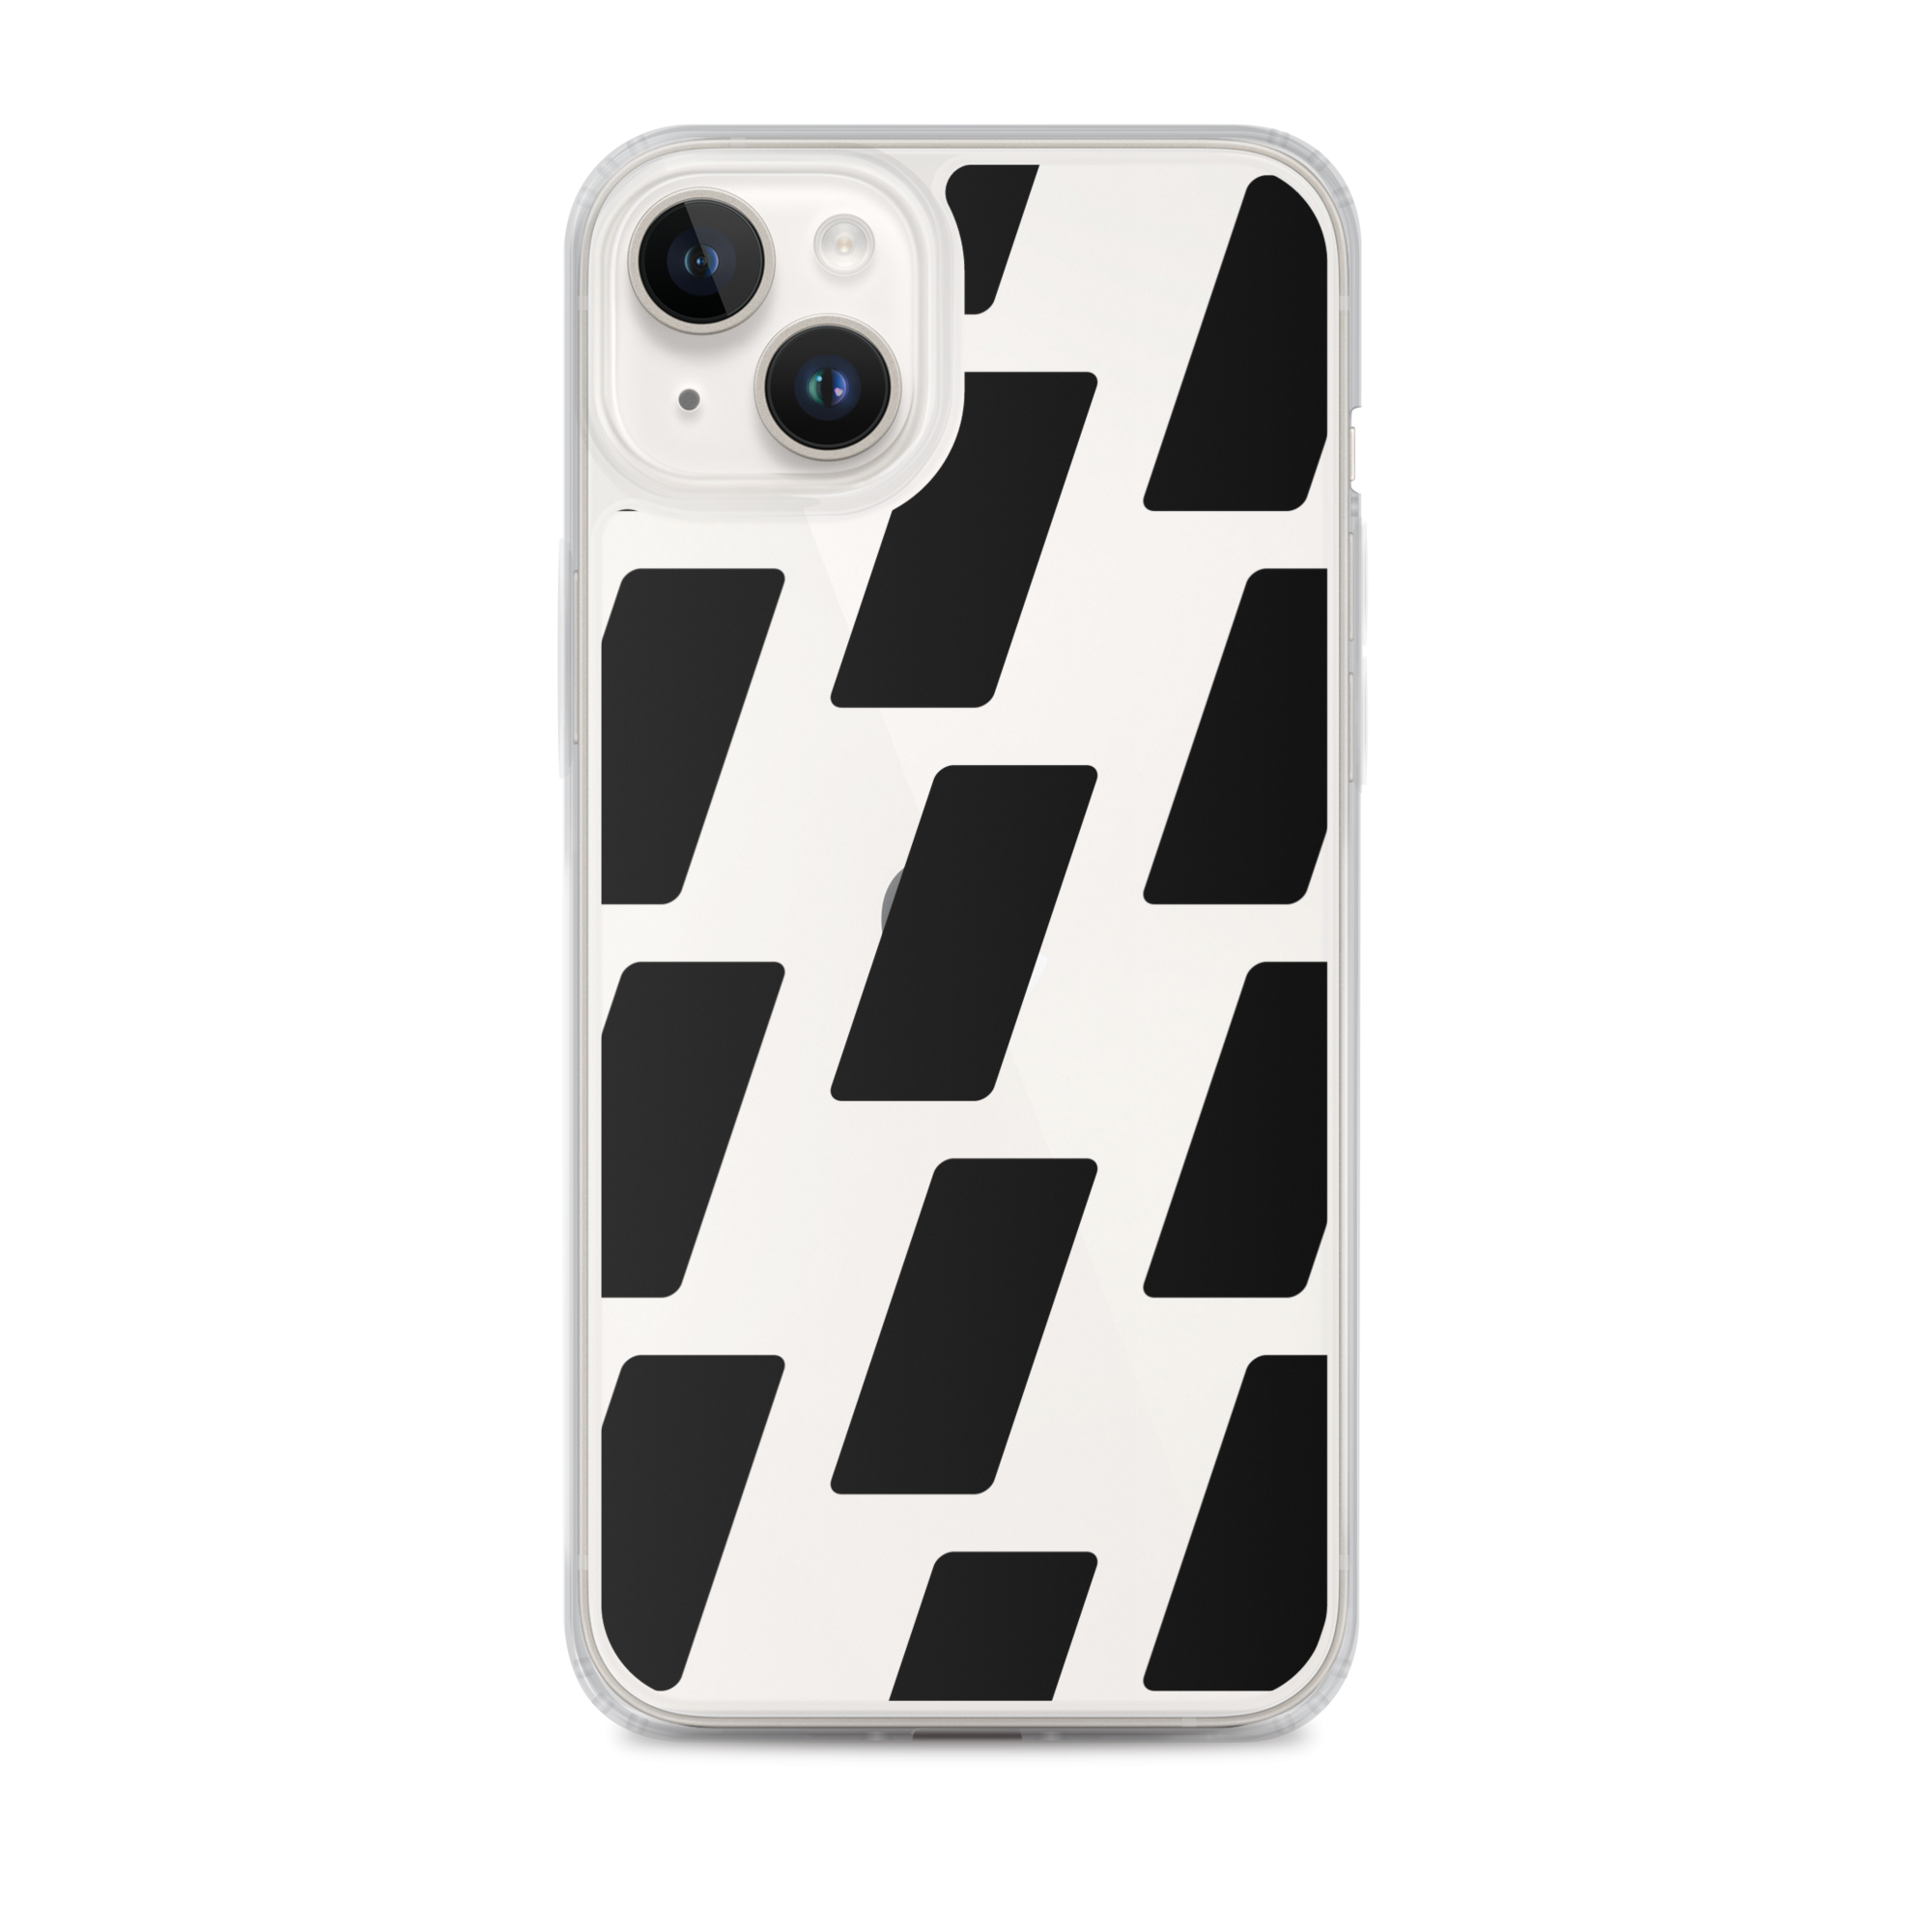 /dev/color slash phone case